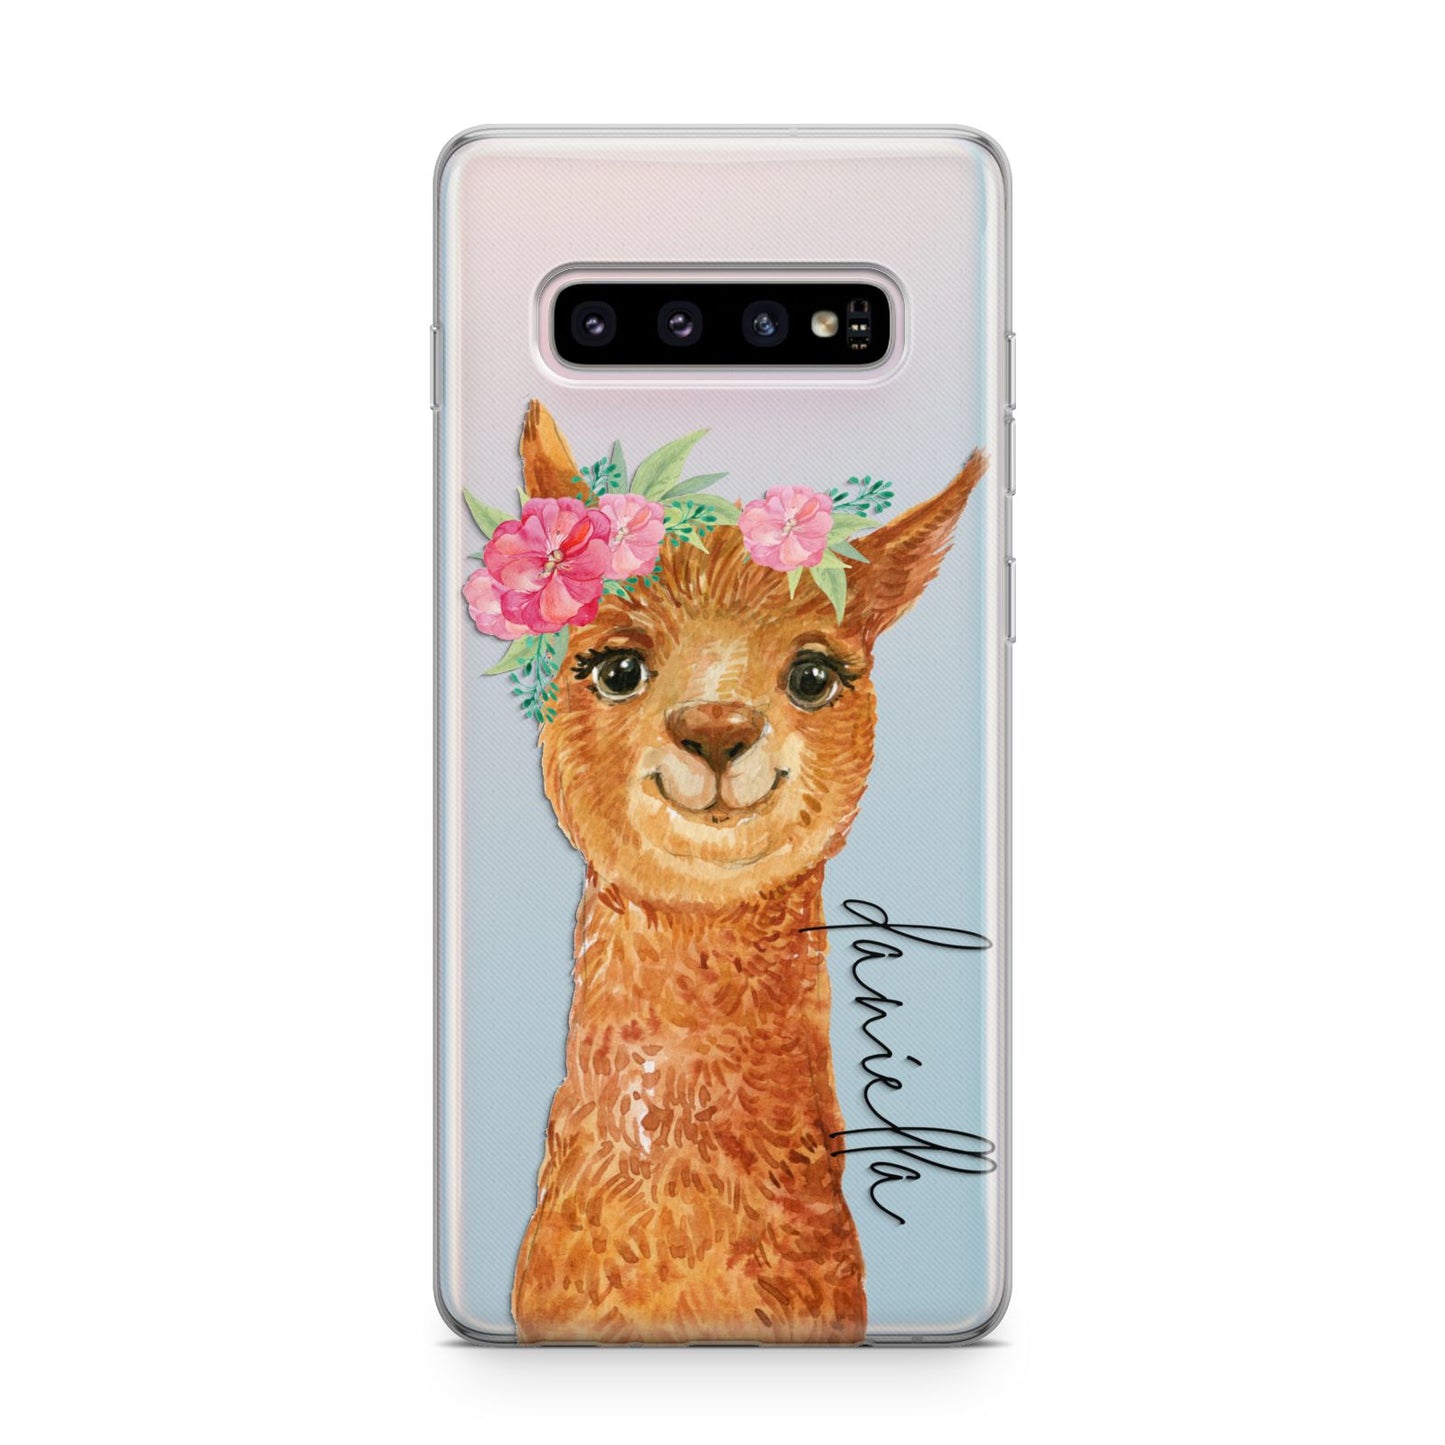 Personalised Llama Samsung Galaxy S10 Plus Case